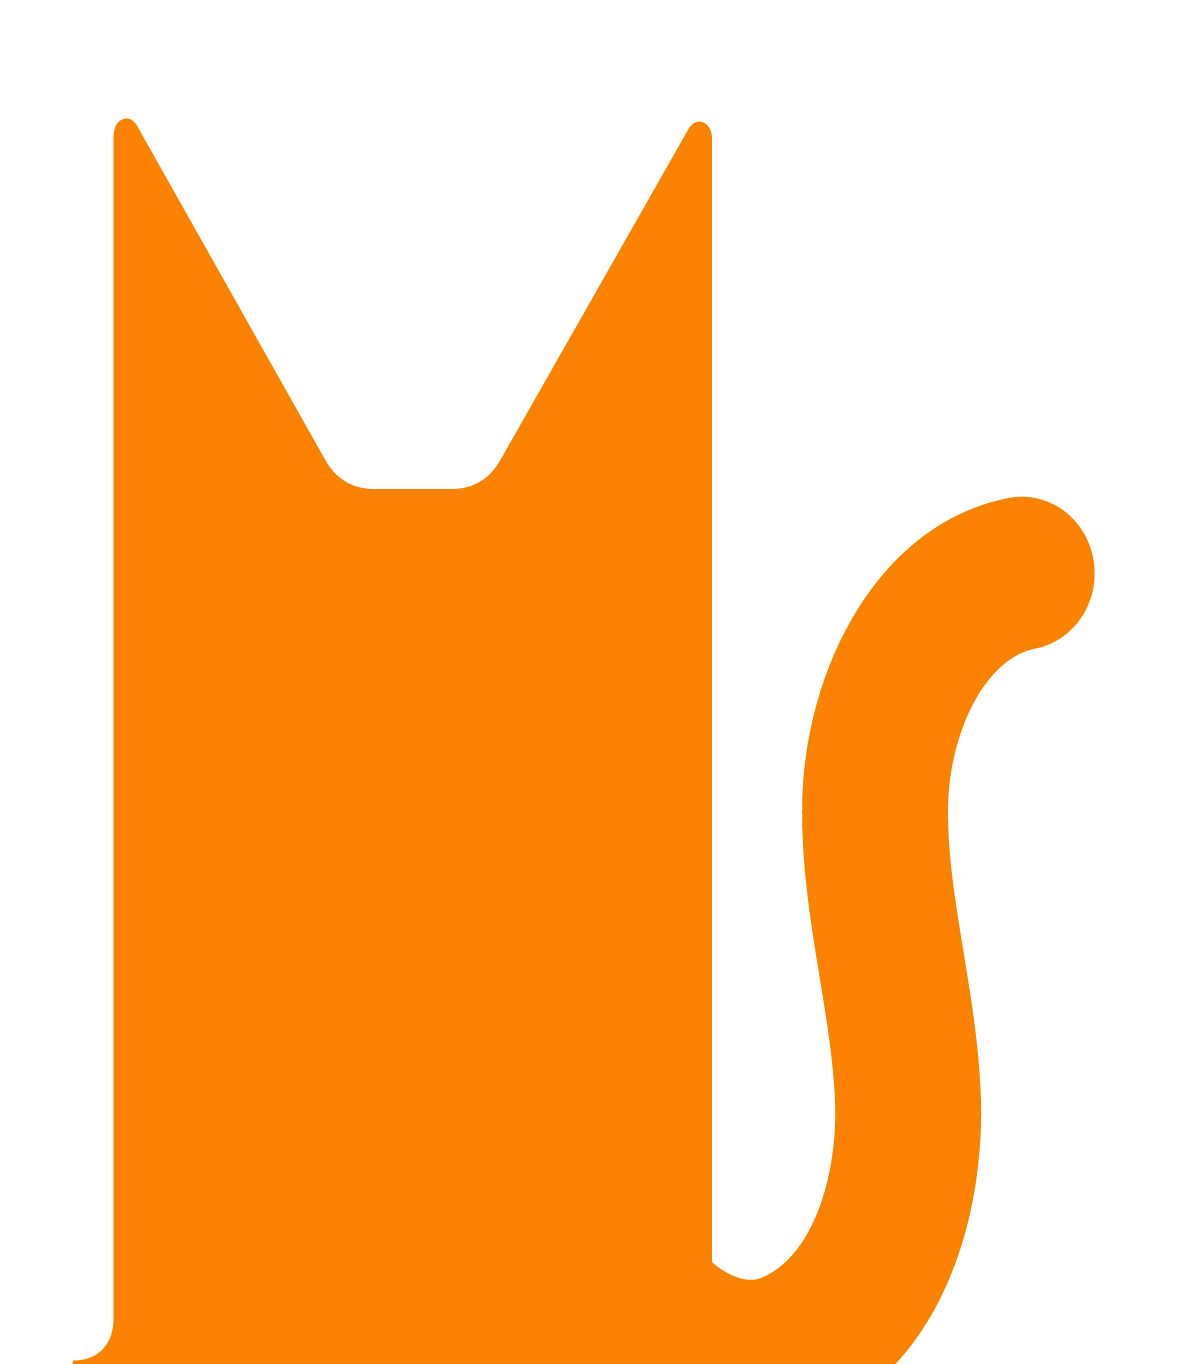 Katt orange logo klumpe vit bakgrund